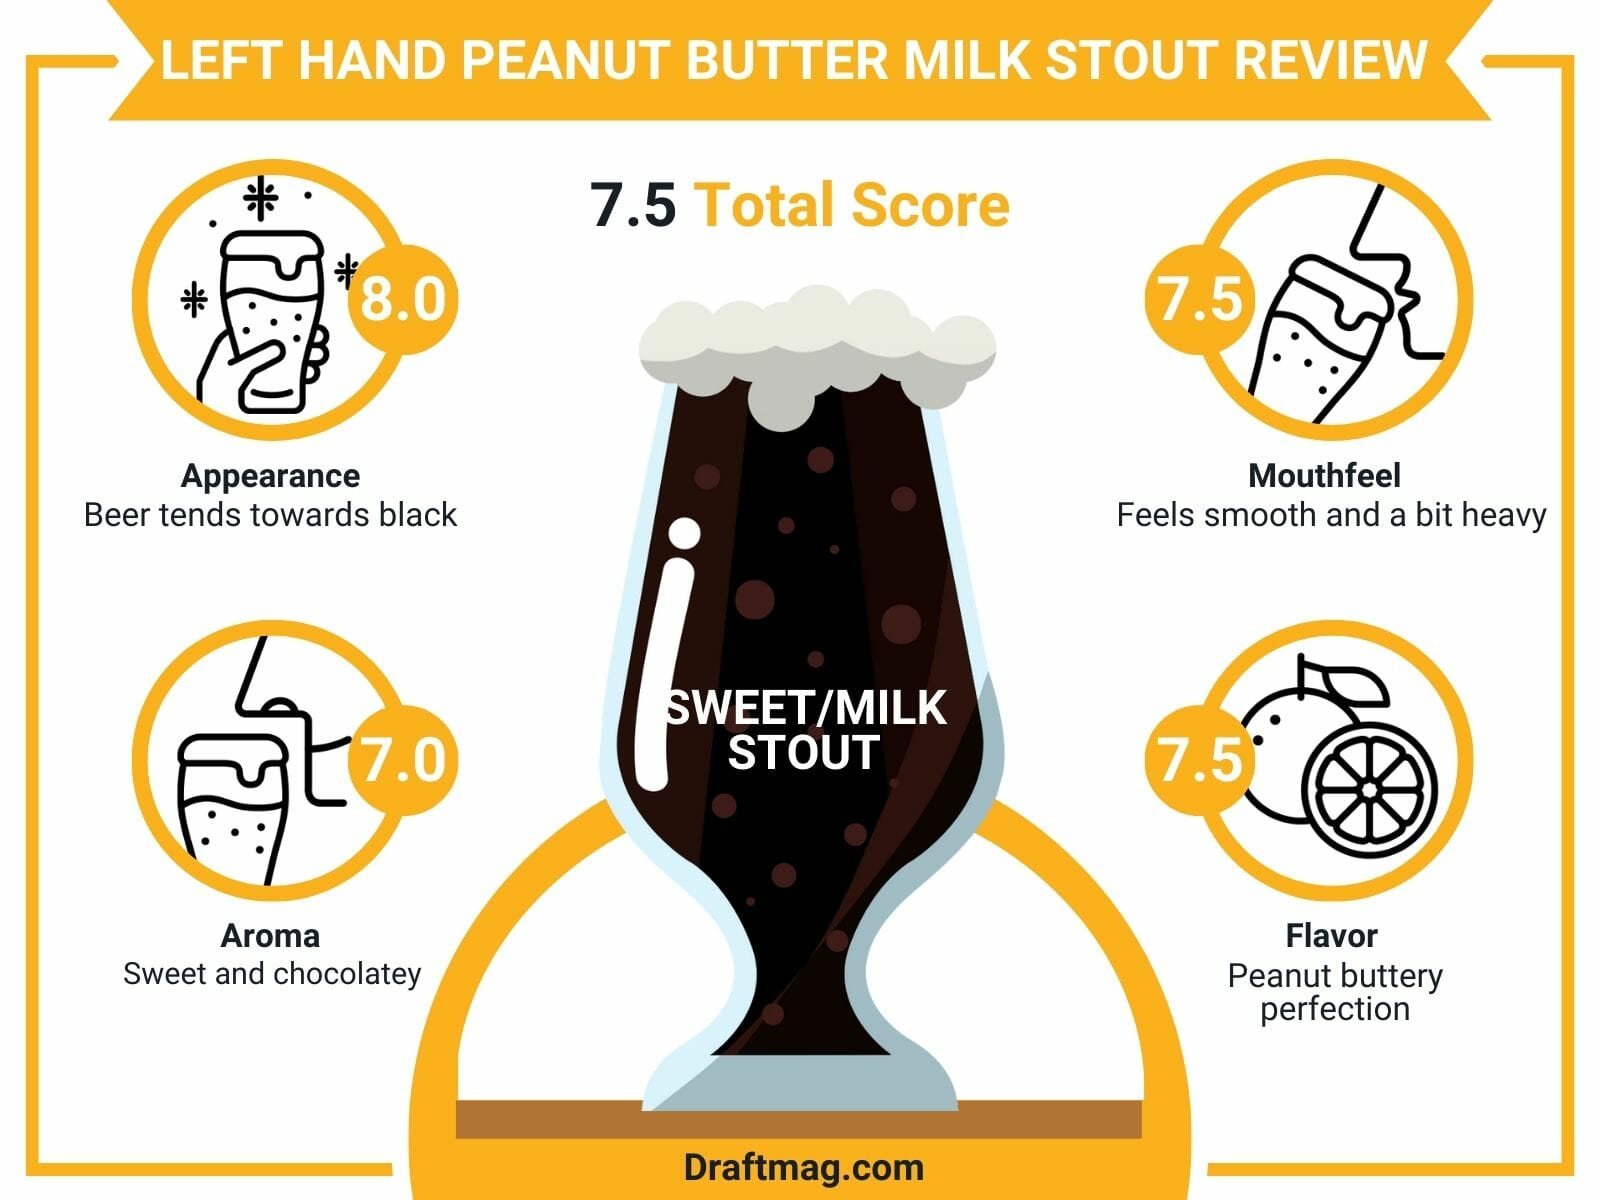 Left Hand Peanut Butter Milk Stout Review Infographic